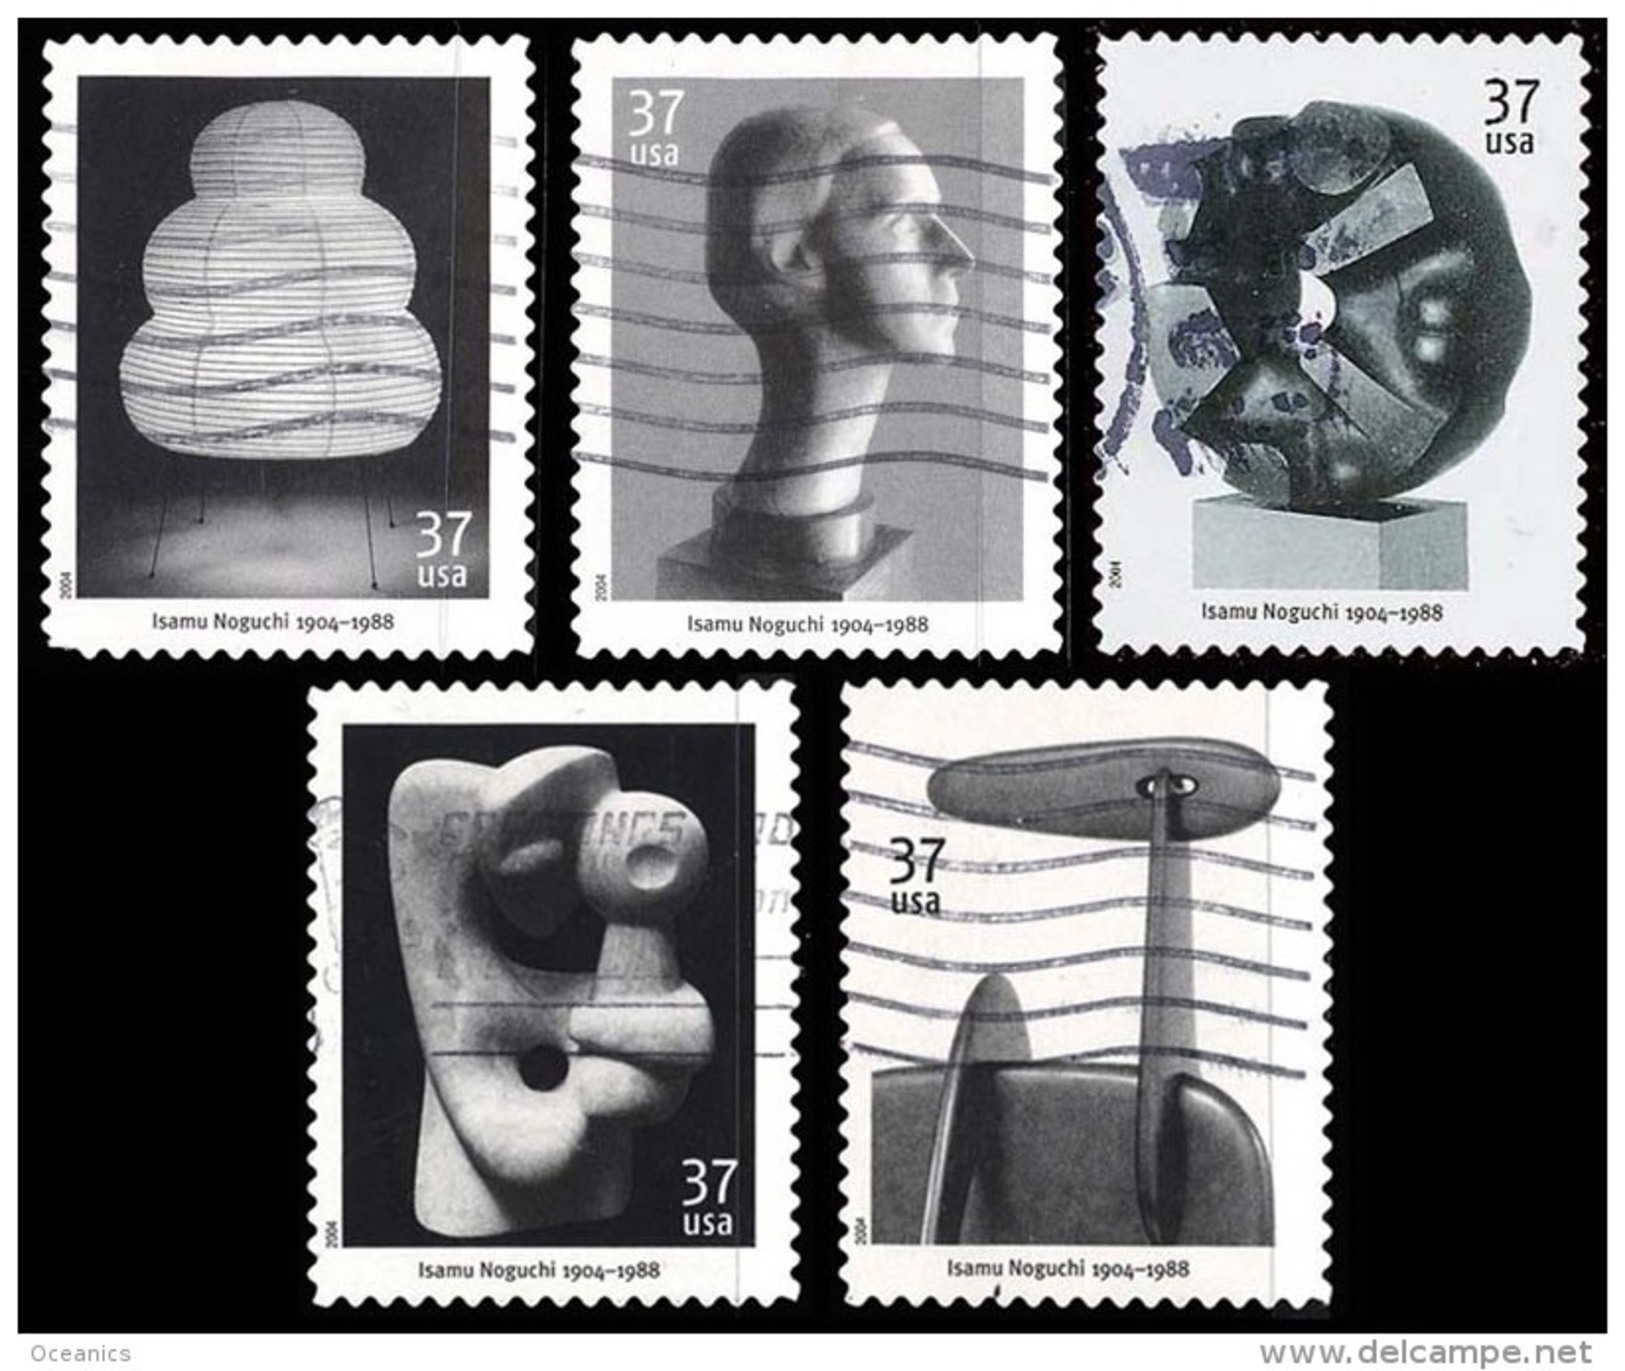 Etats-Unis / United States (Scott No.3857-61 - Sculpteur / Isamu Noguchi / Sculptor) (o) Série / Set - Gebruikt